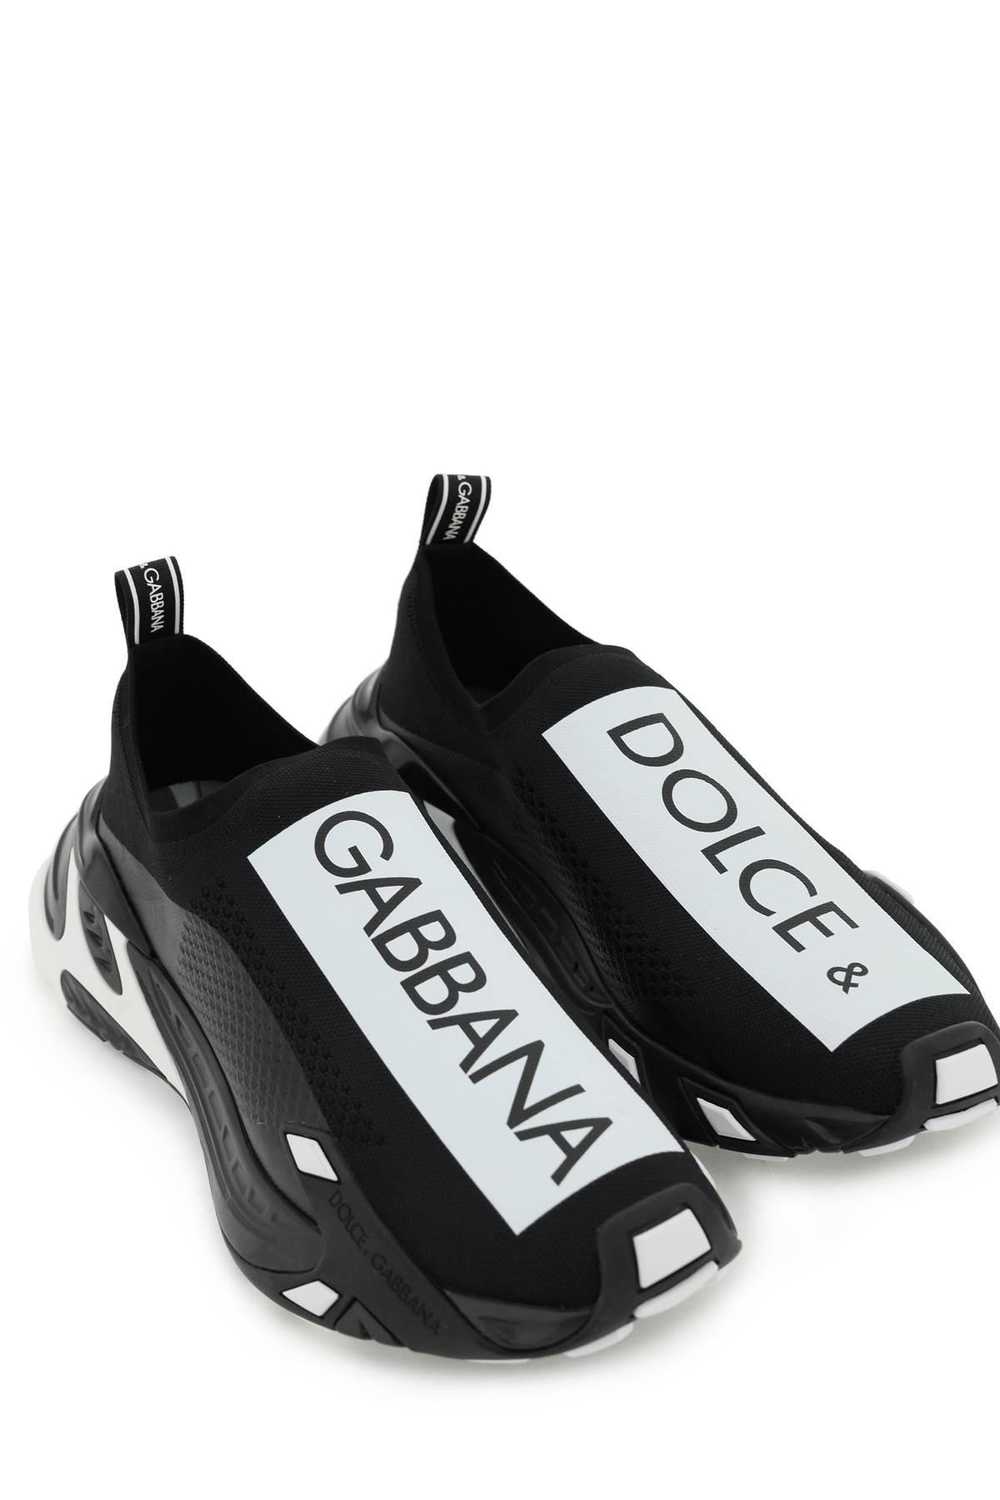 Dolce & Gabbana Sorrento Sneakers - image 4